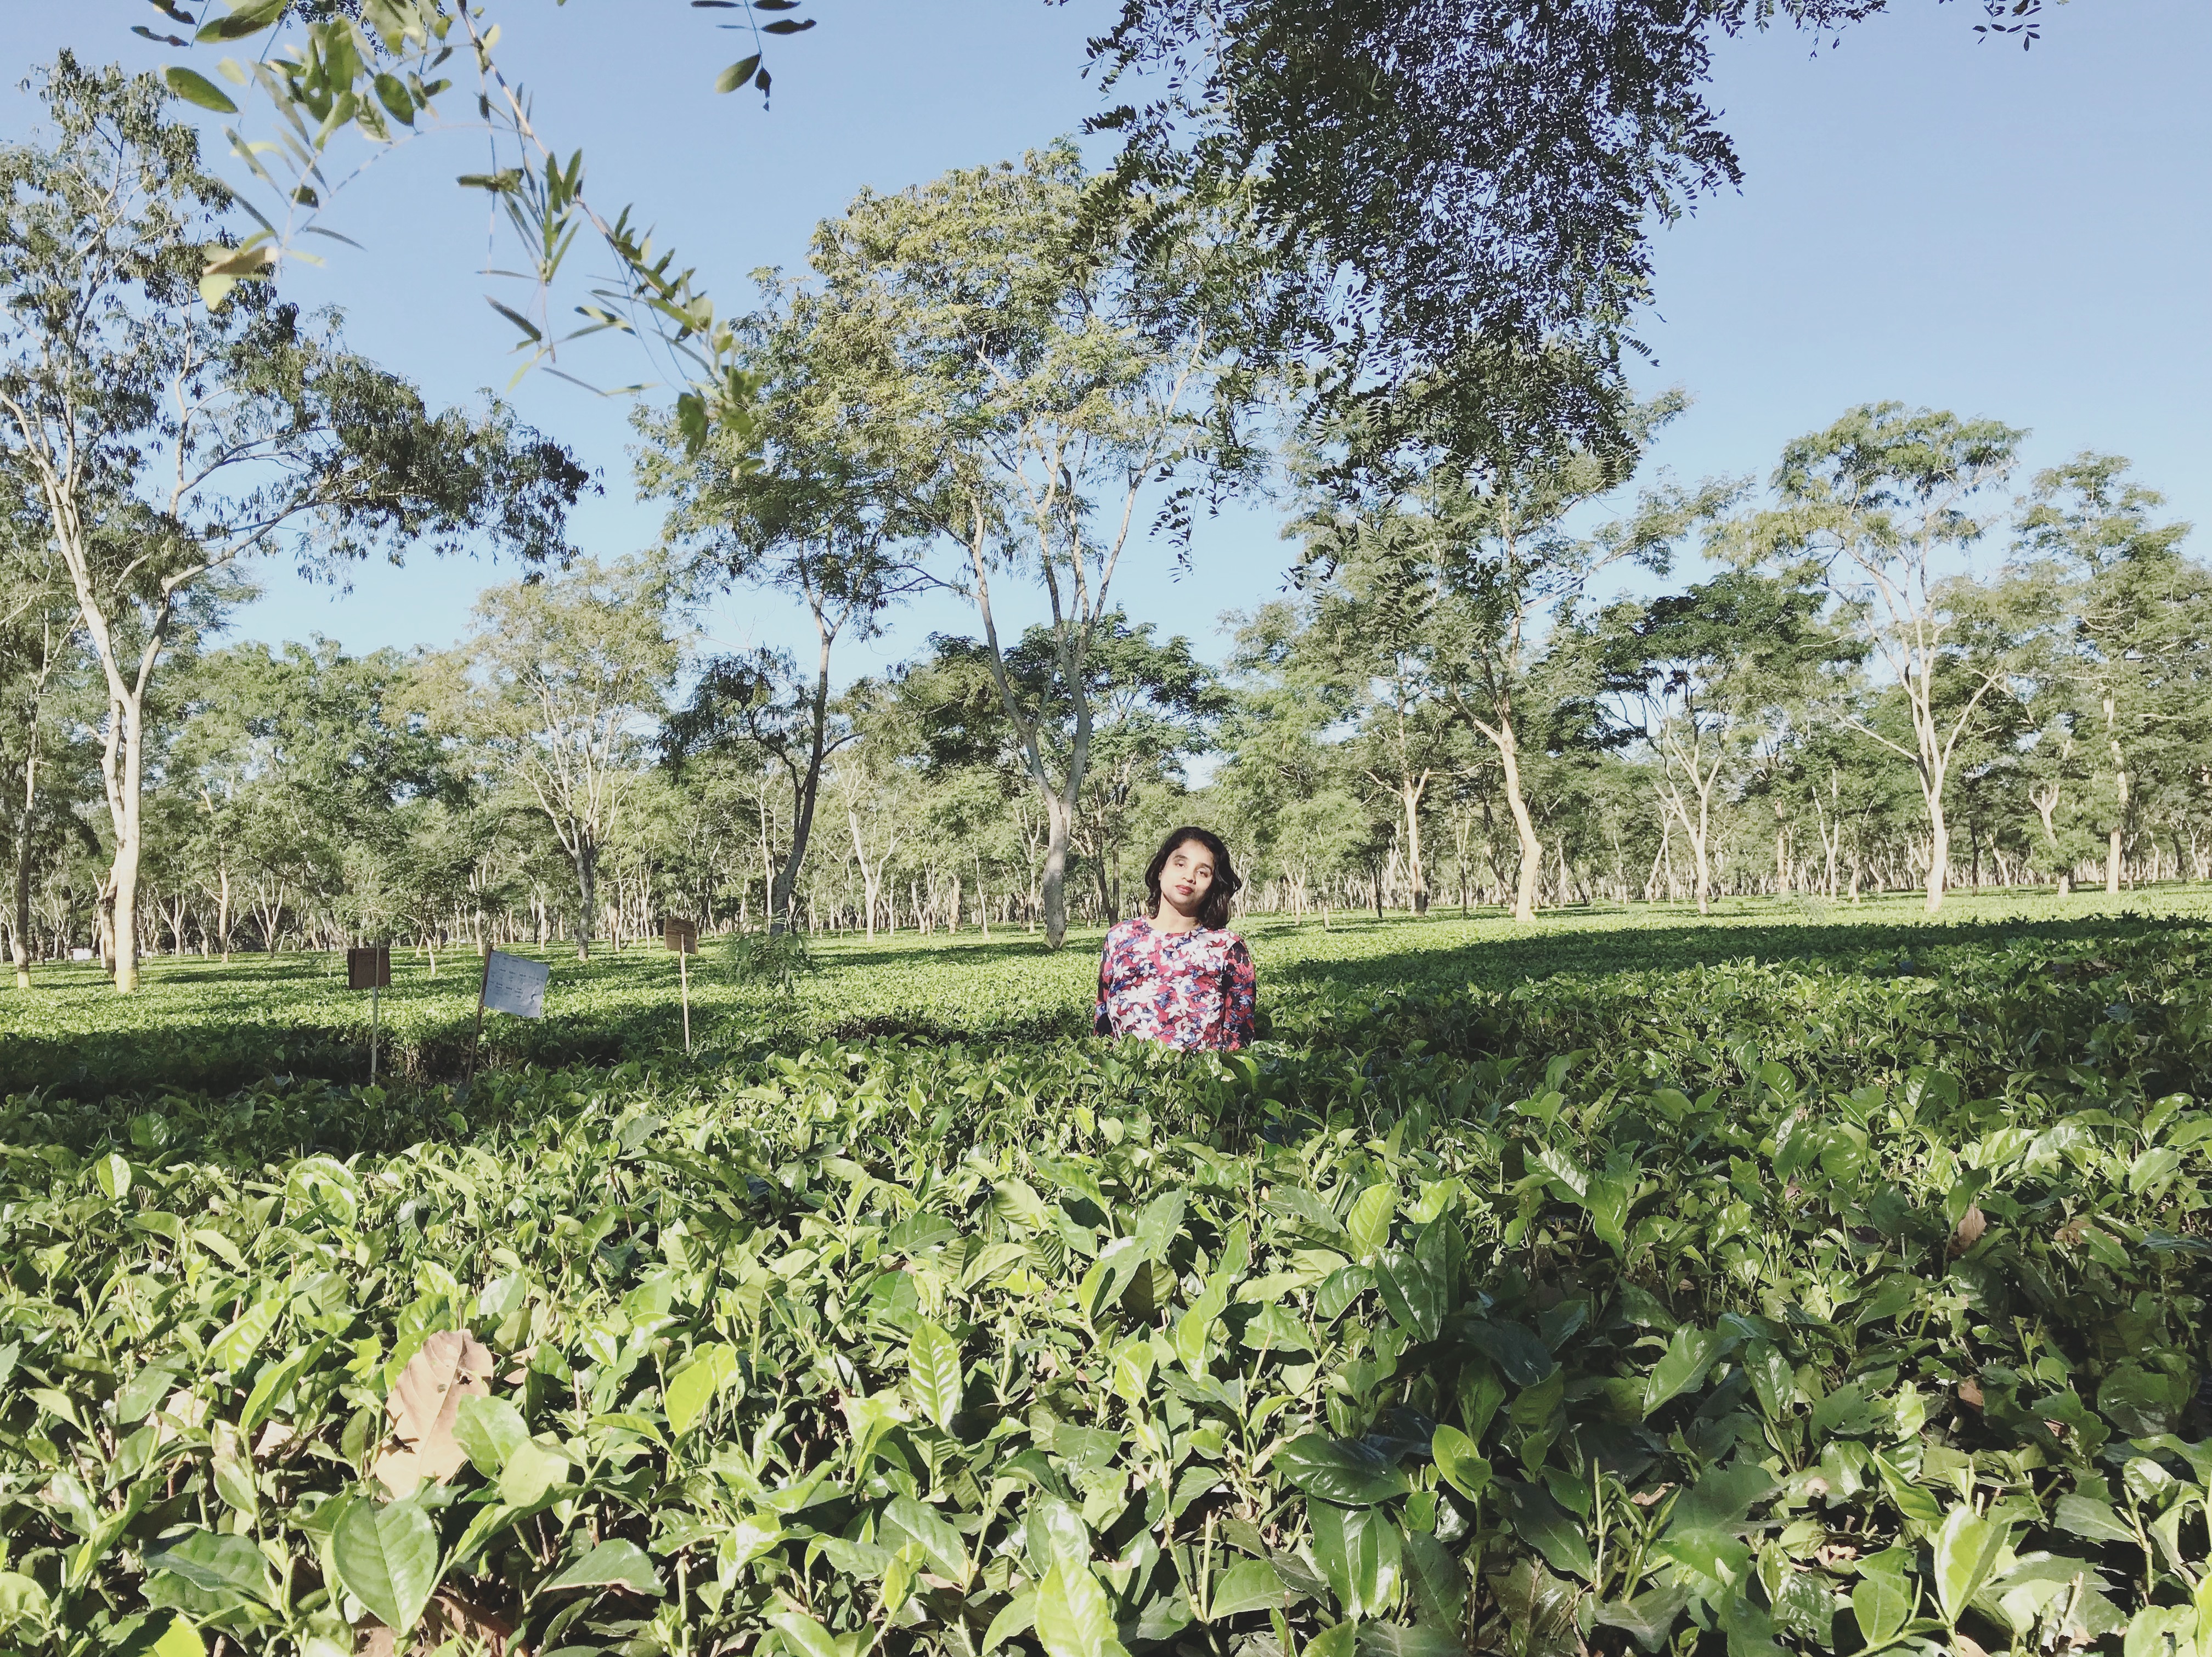 Strolling through the tea gardens in Assam